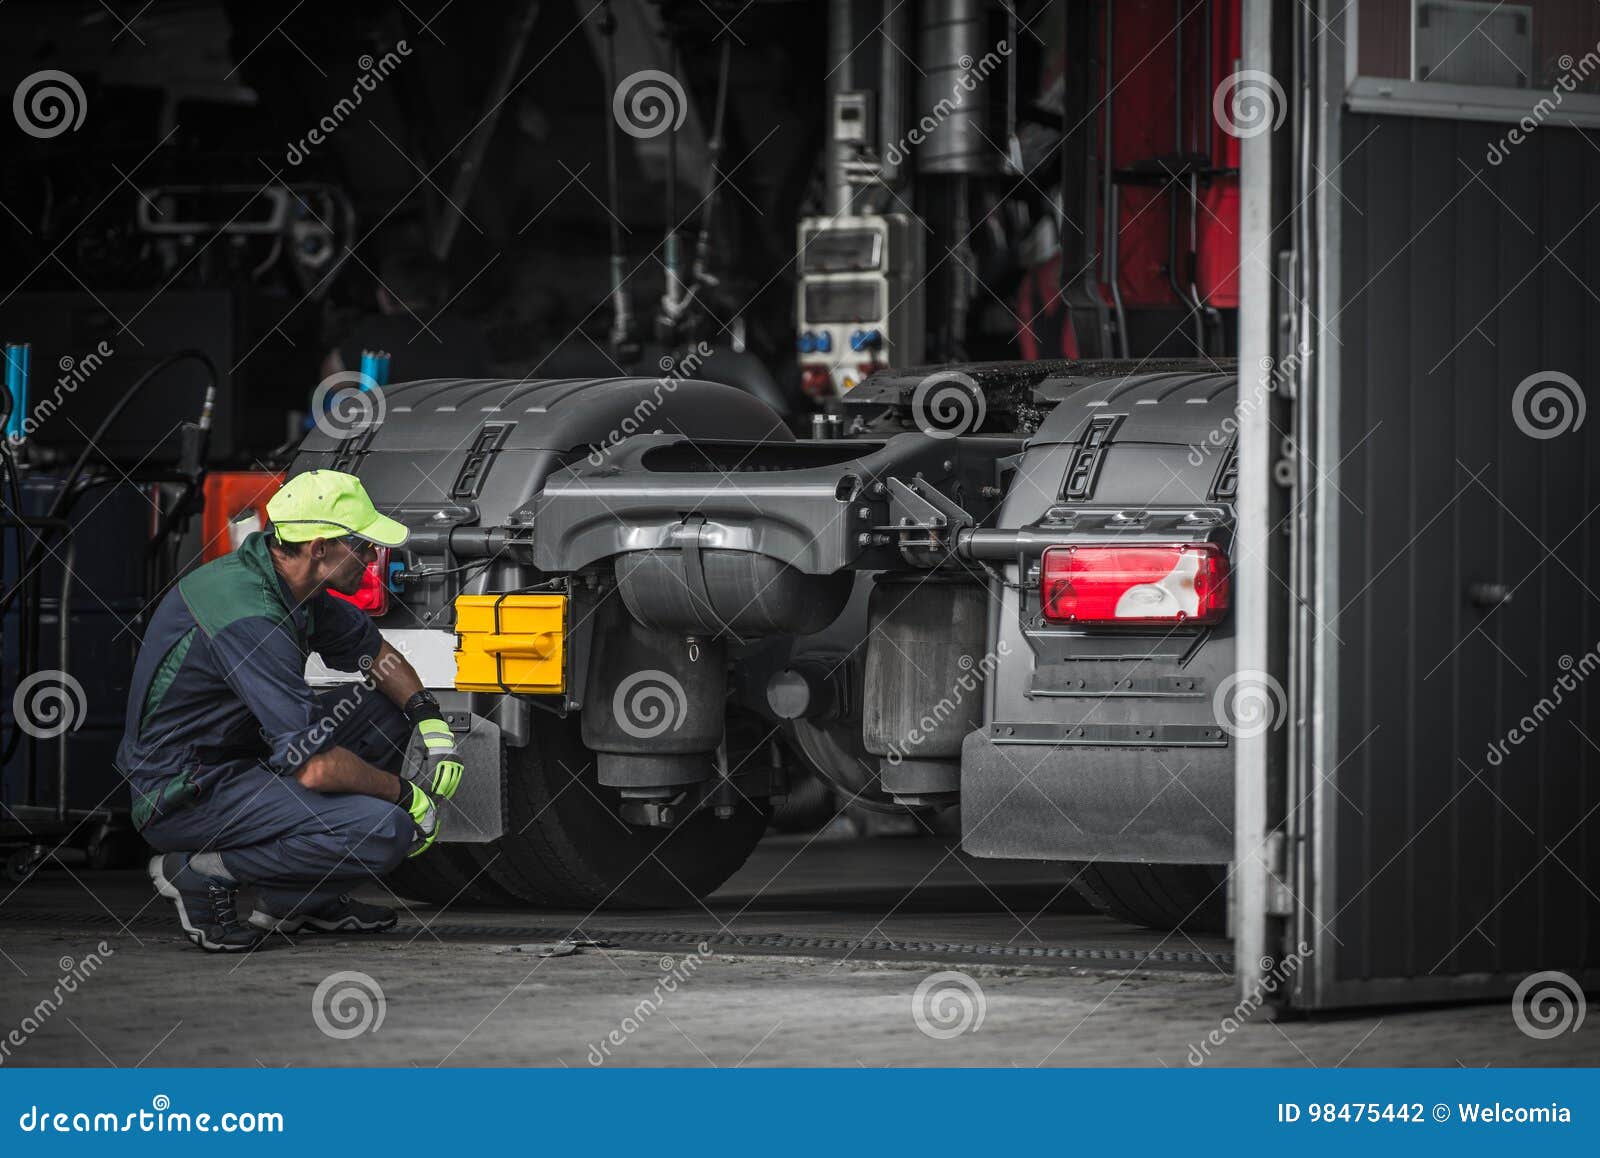 truck service technician job